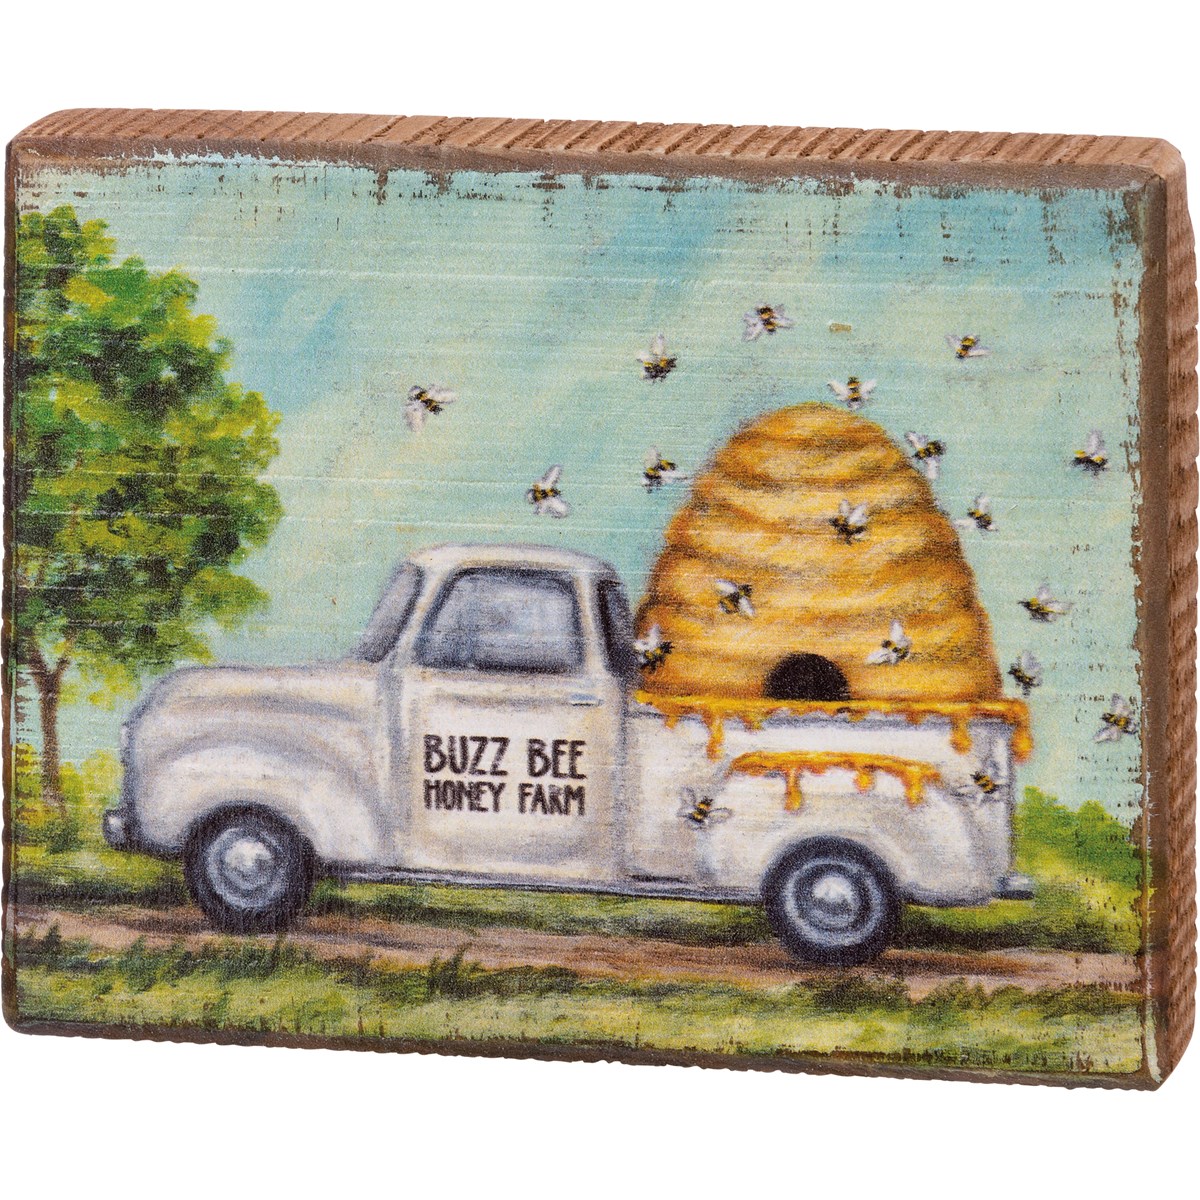 Bees Buzz Bee Honey Farm Block Sign - Wood